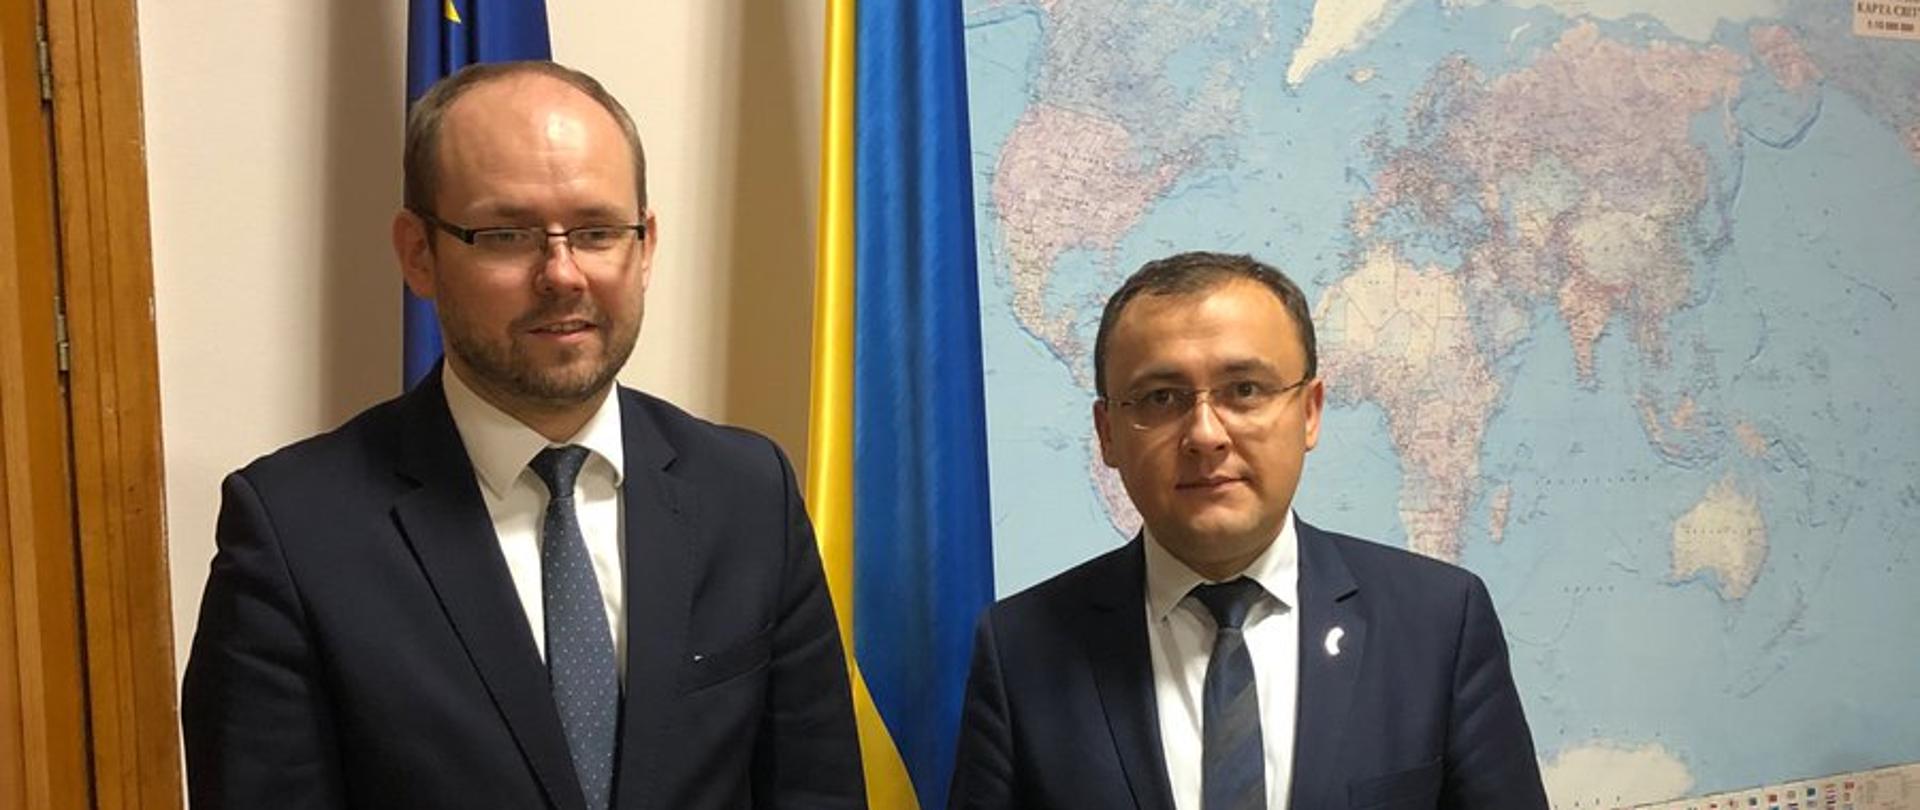 Deputy Minister Marcin Przydacz visits Ukraine